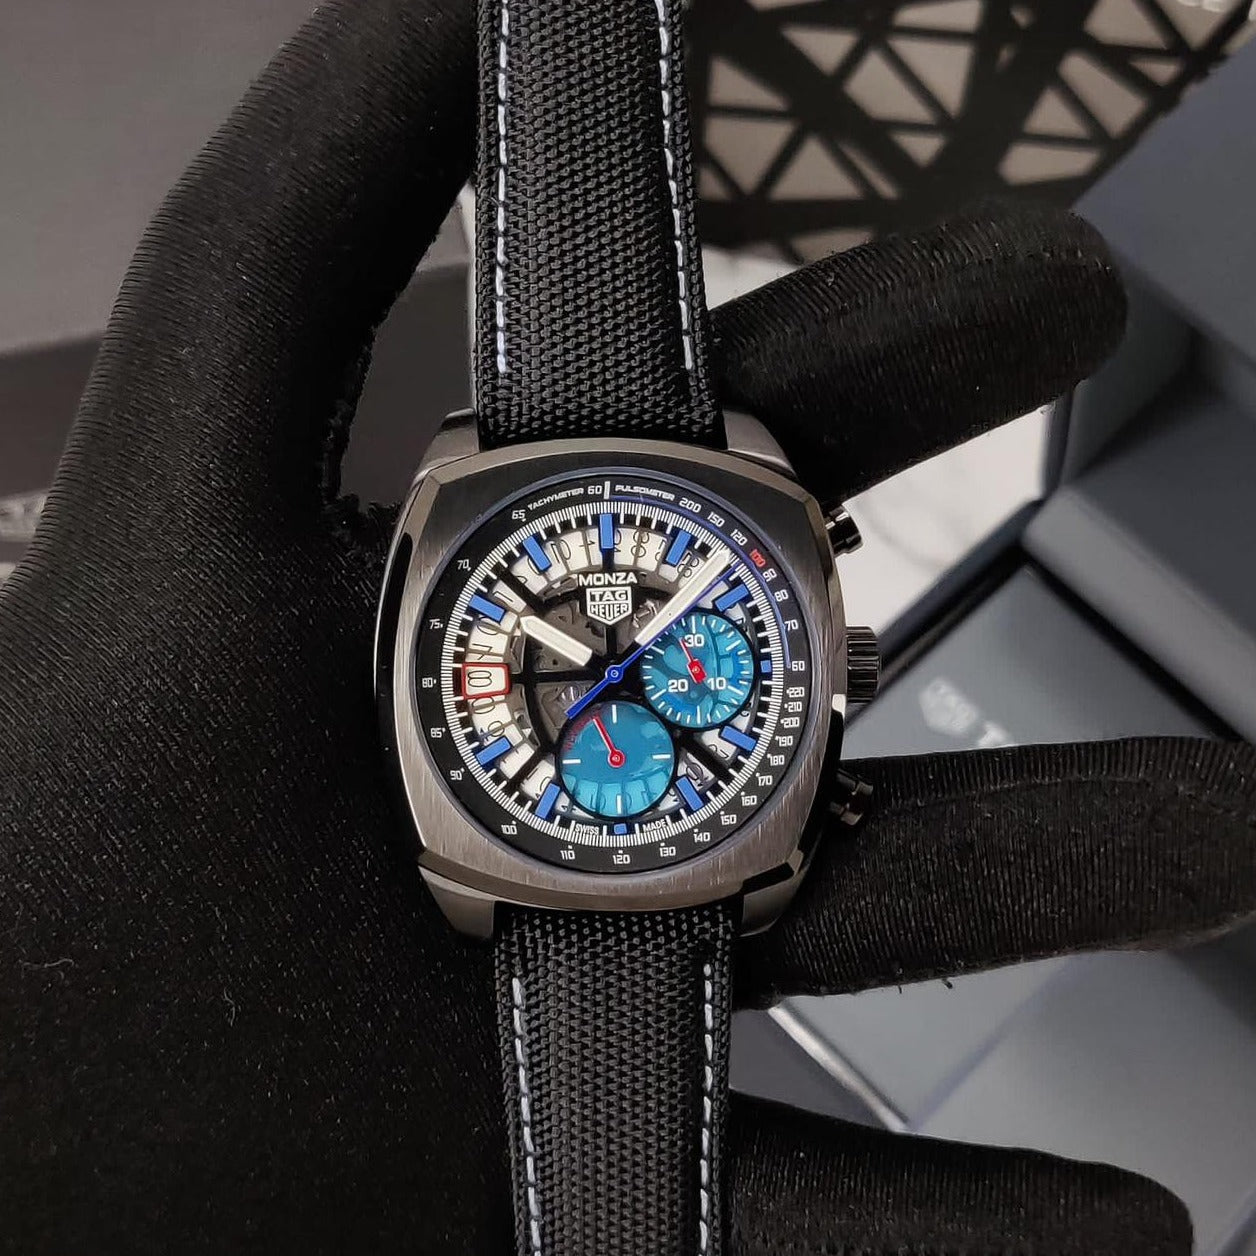 Tg Monza contemporary Premium watch - AmazingBaba